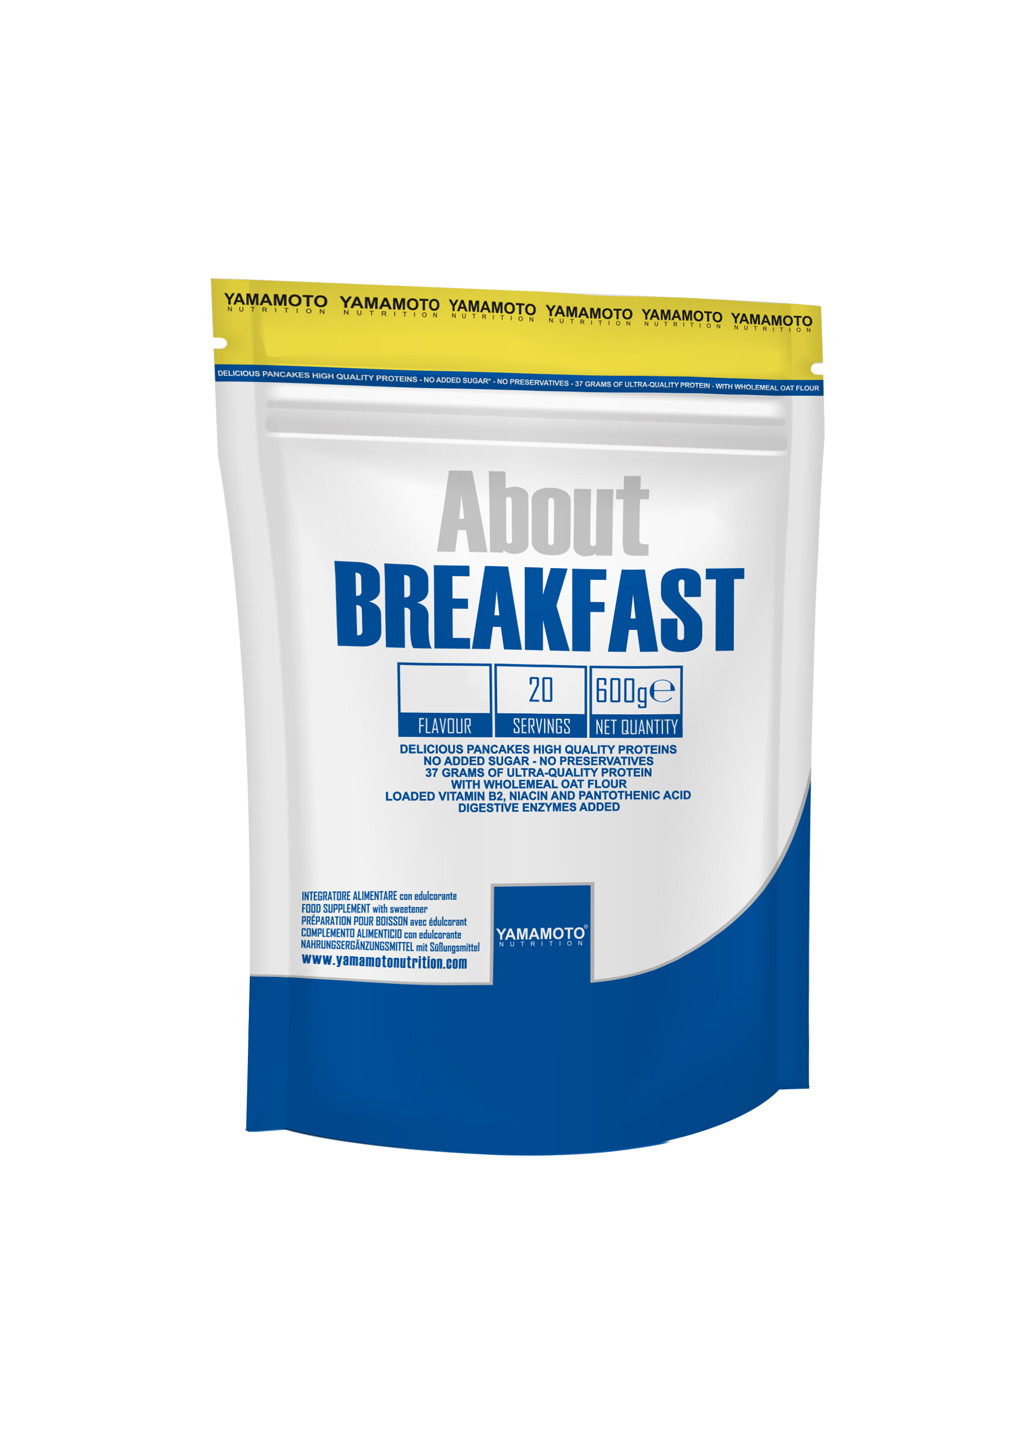 Вівсянка для спортсменів About Breakfast - 600g Vanilla ] Yamamoto Nutrition (240485933)